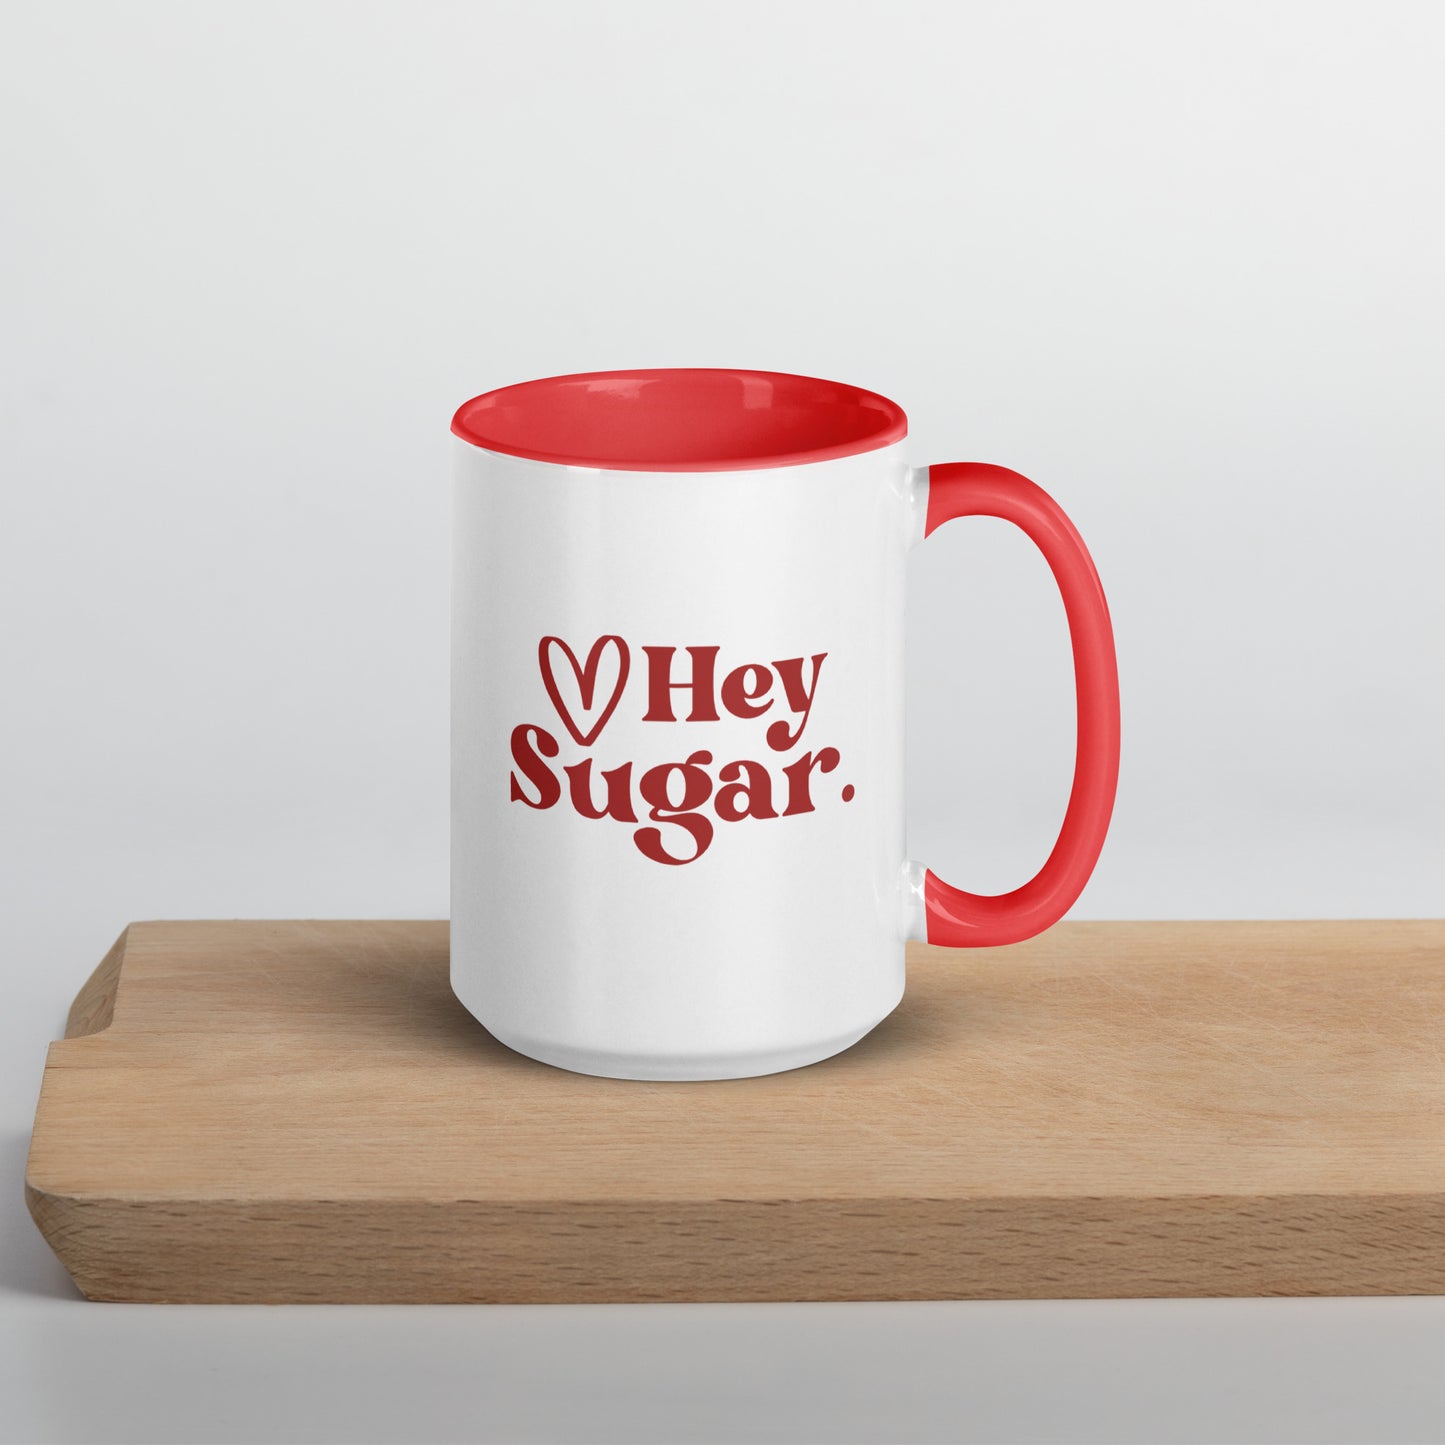 Hey Sugar - Mug with Color Inside